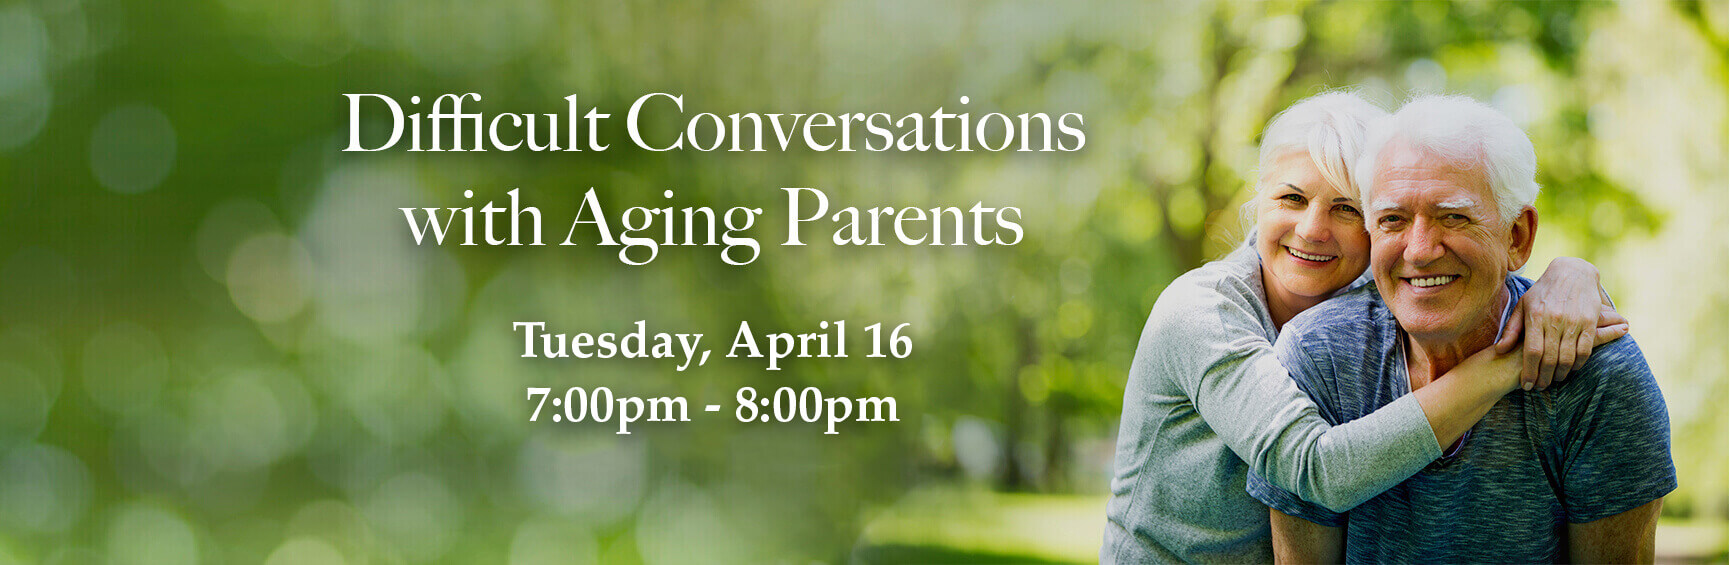 Difficult Conversations with Aging Parents